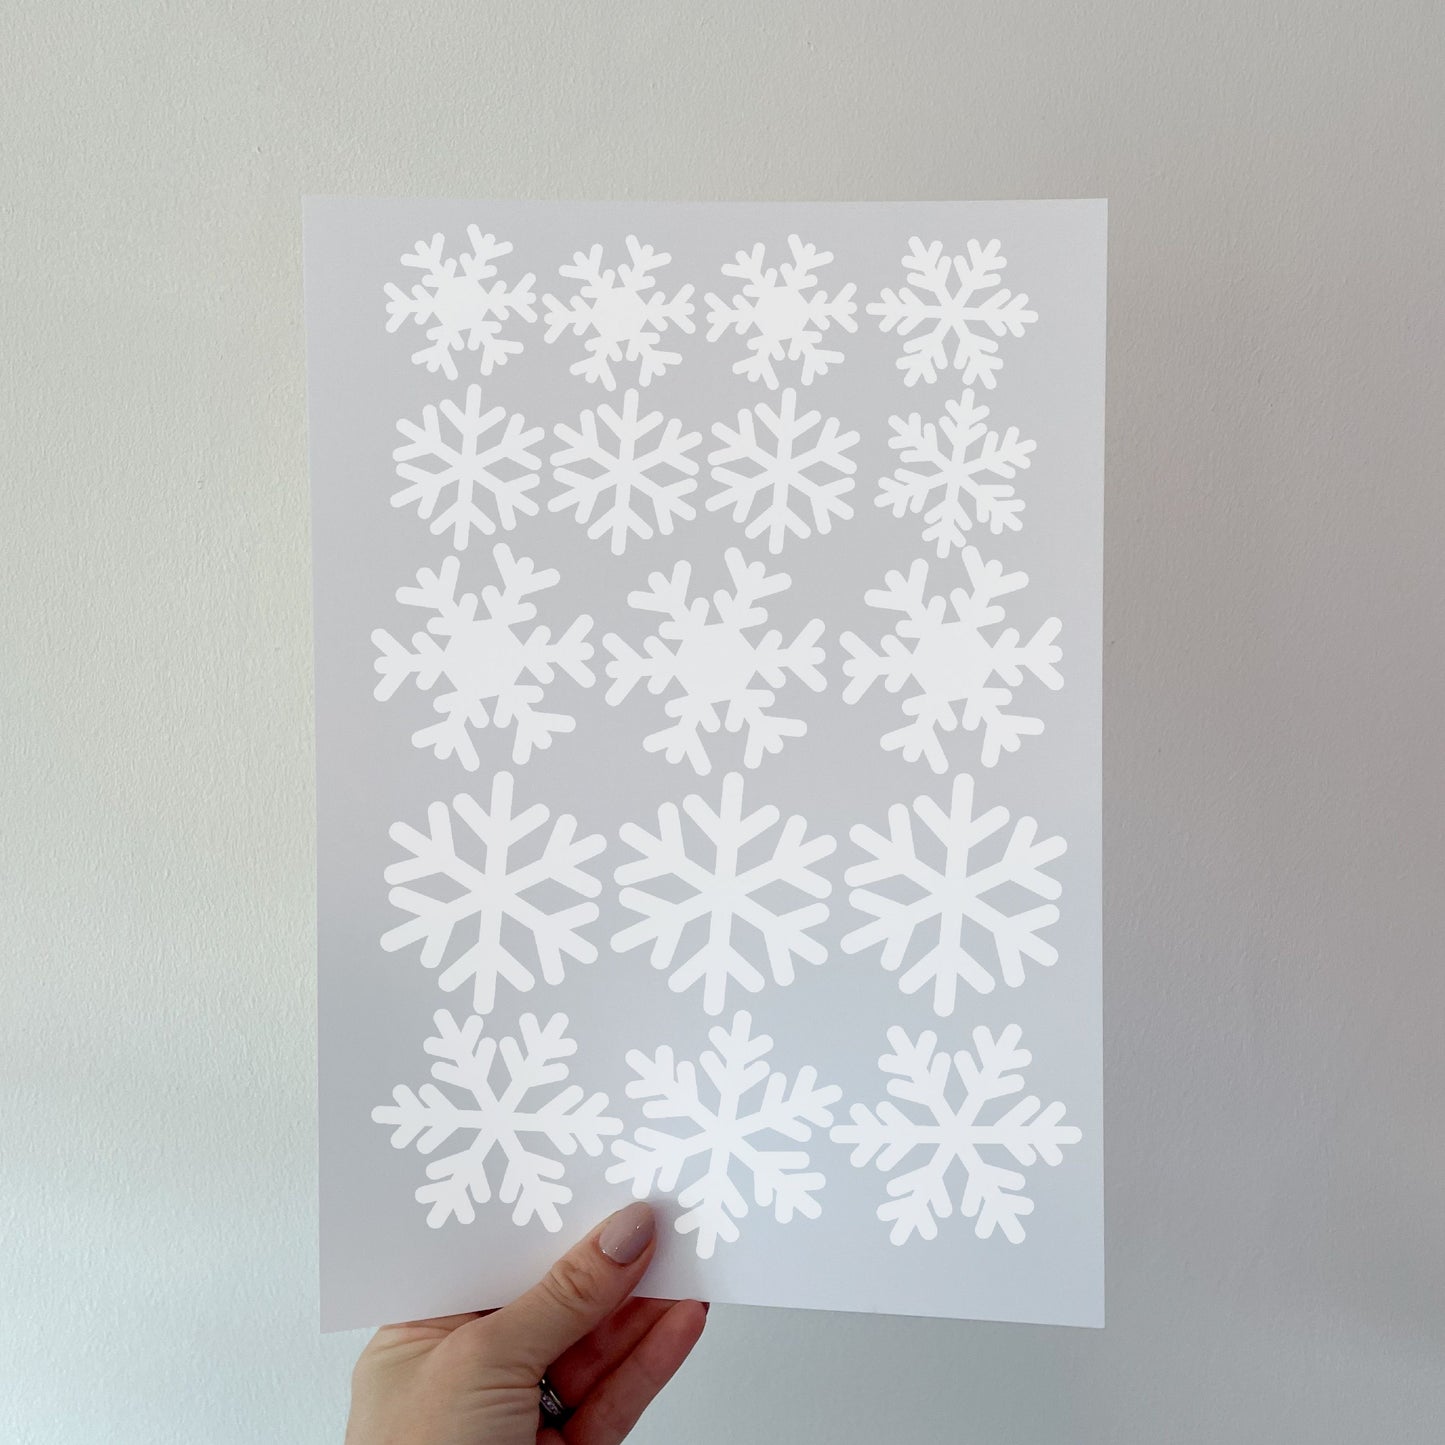 Value Wall Sticker Sheets - Christmas Snowflakes - Small